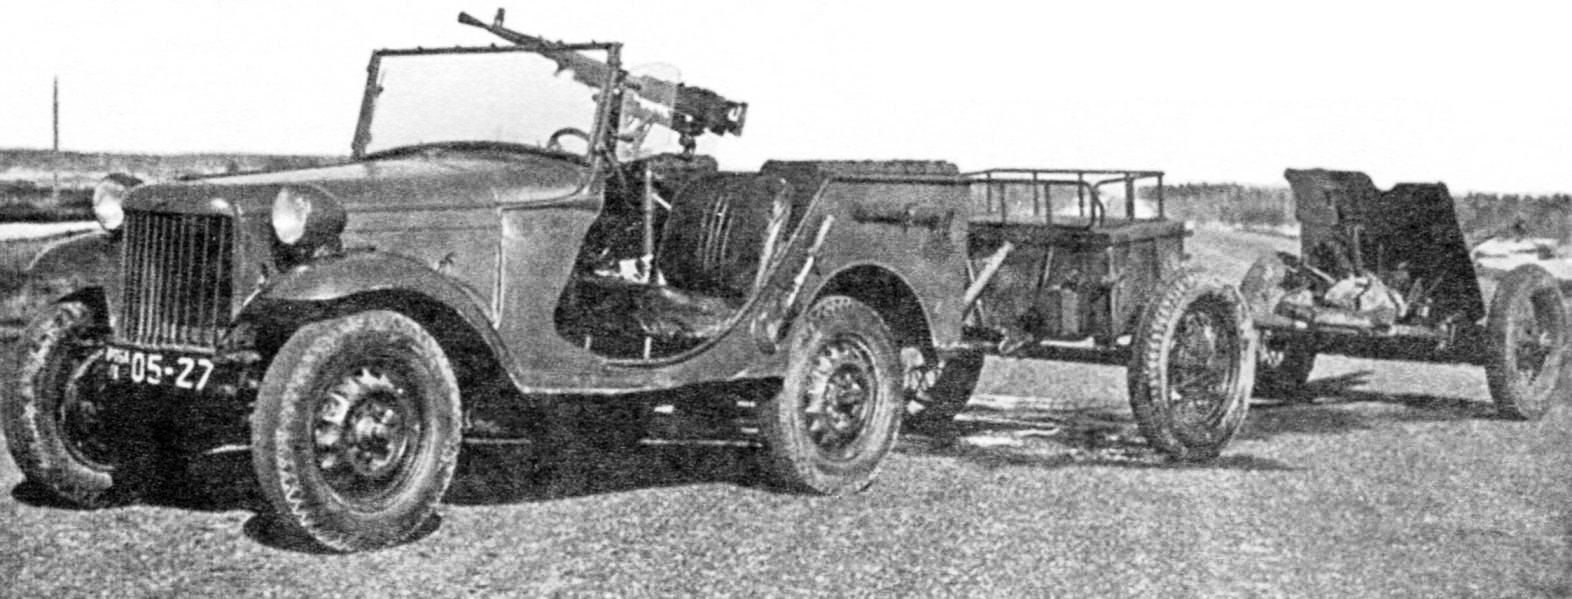 experimental GAZ-64 with a machine gun -tow antitank 45 mm gun with the limber for ammunition